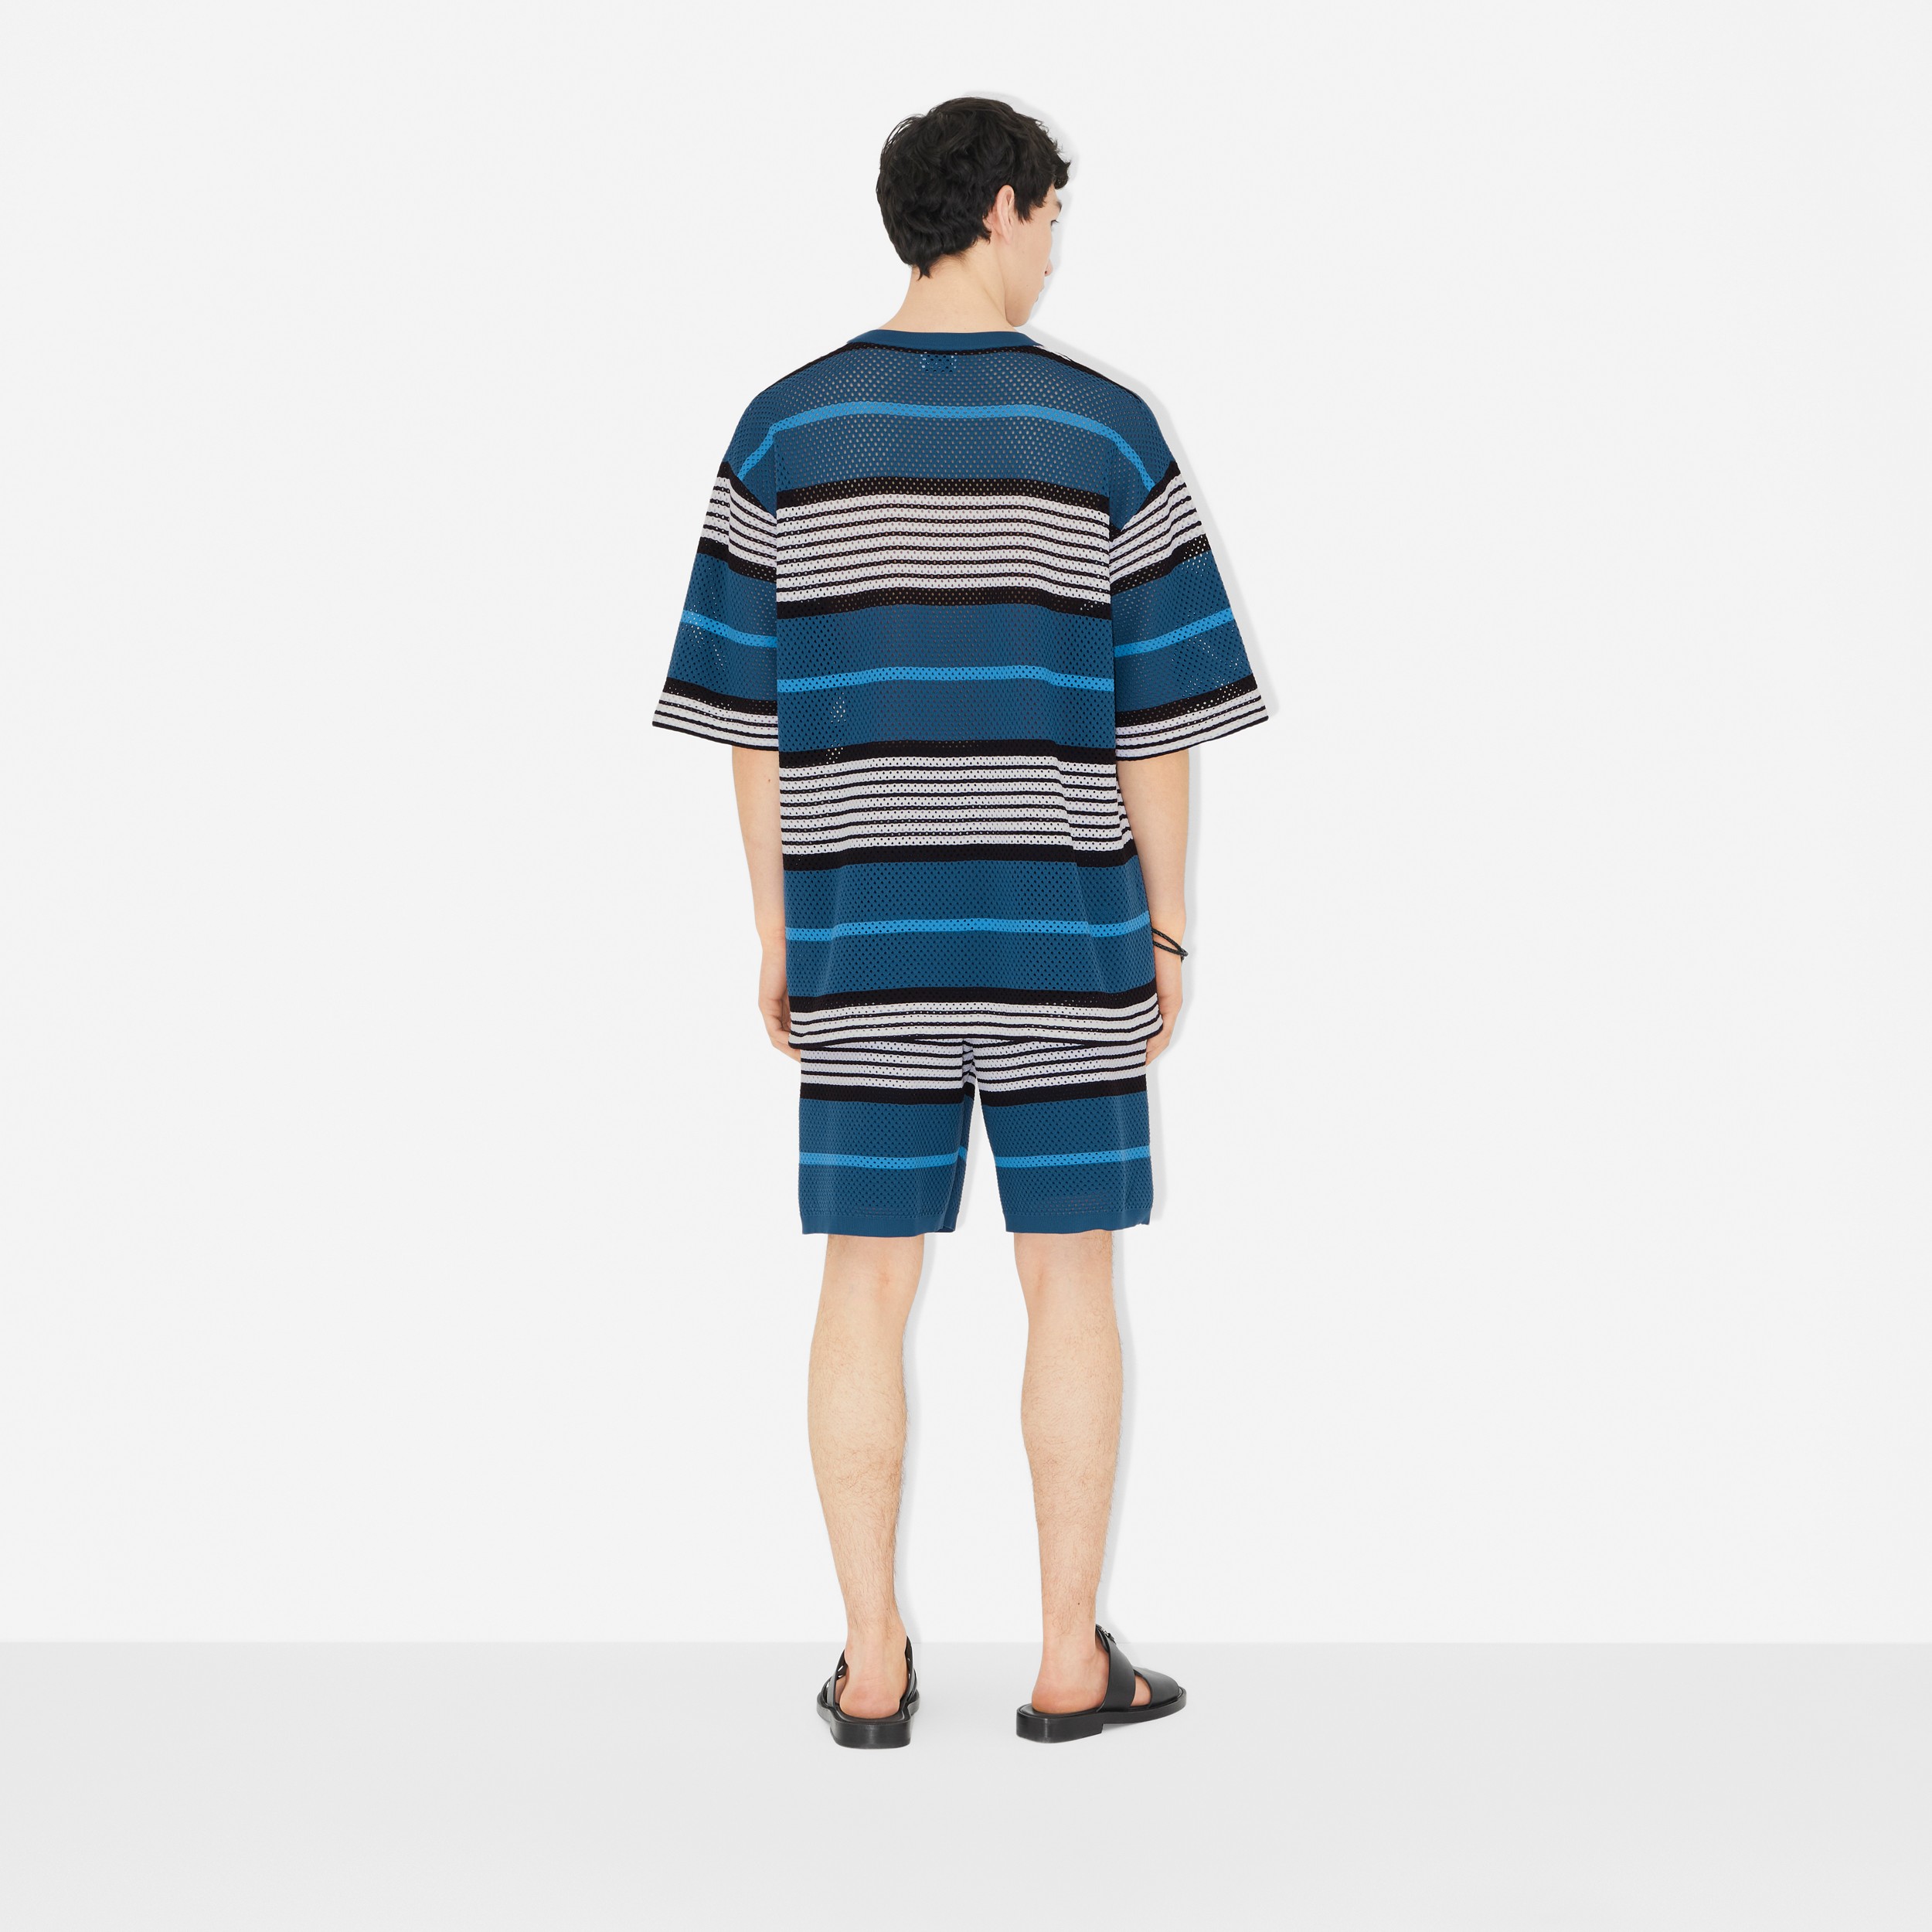 T-shirt oversize in nylon con stampa a righe (Navy Intenso) - Uomo | Sito ufficiale Burberry® - 4